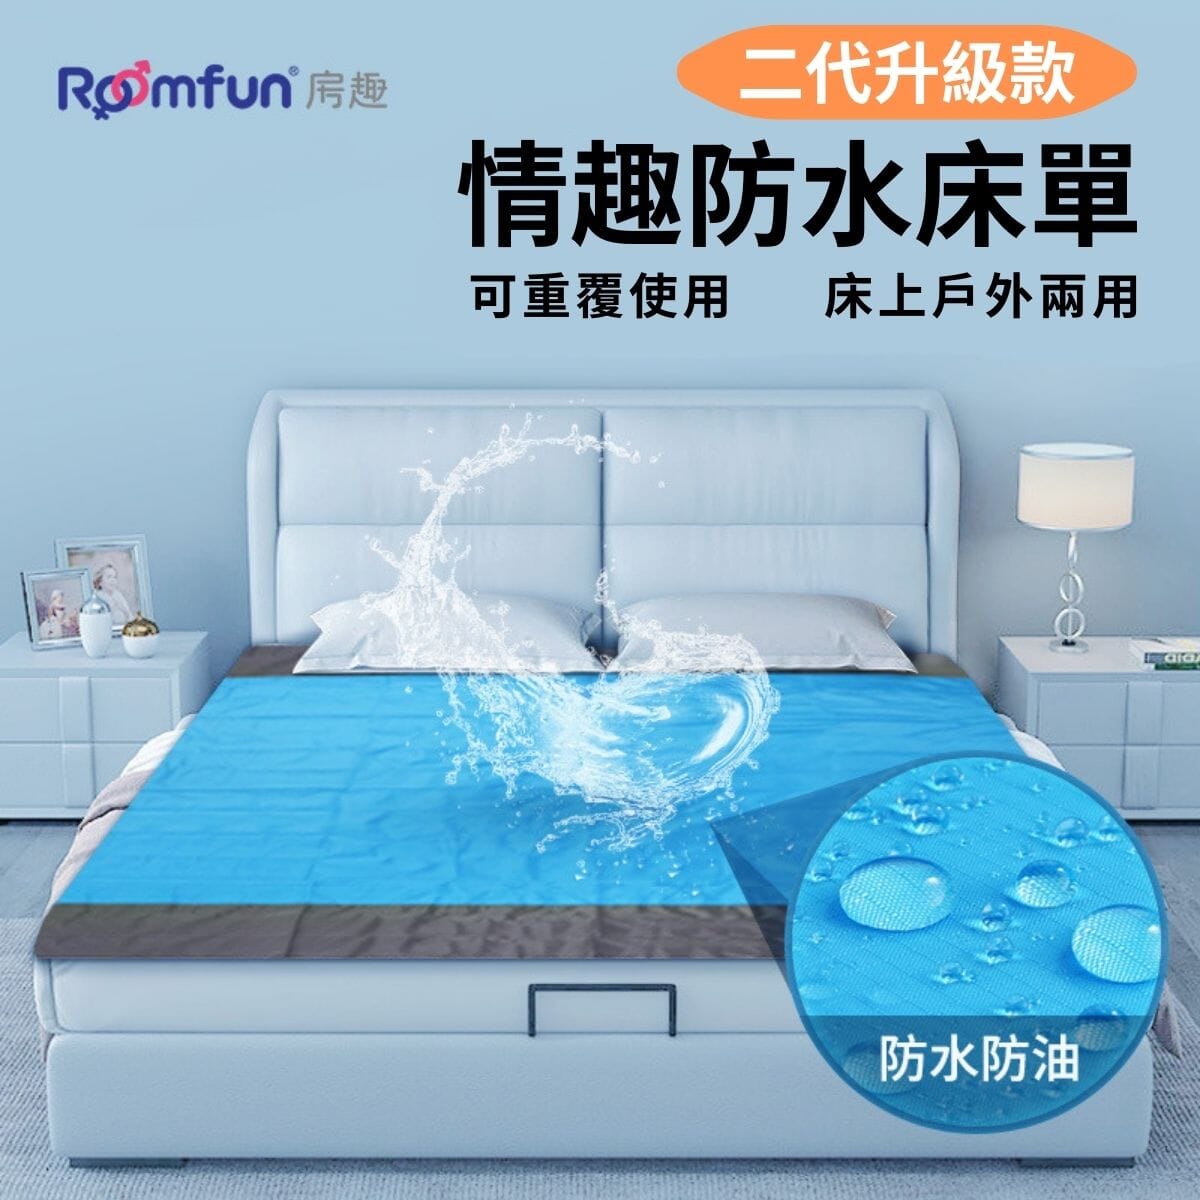 ROOMFUN 便携式防水防油多用途床墊 防水床墊 購買